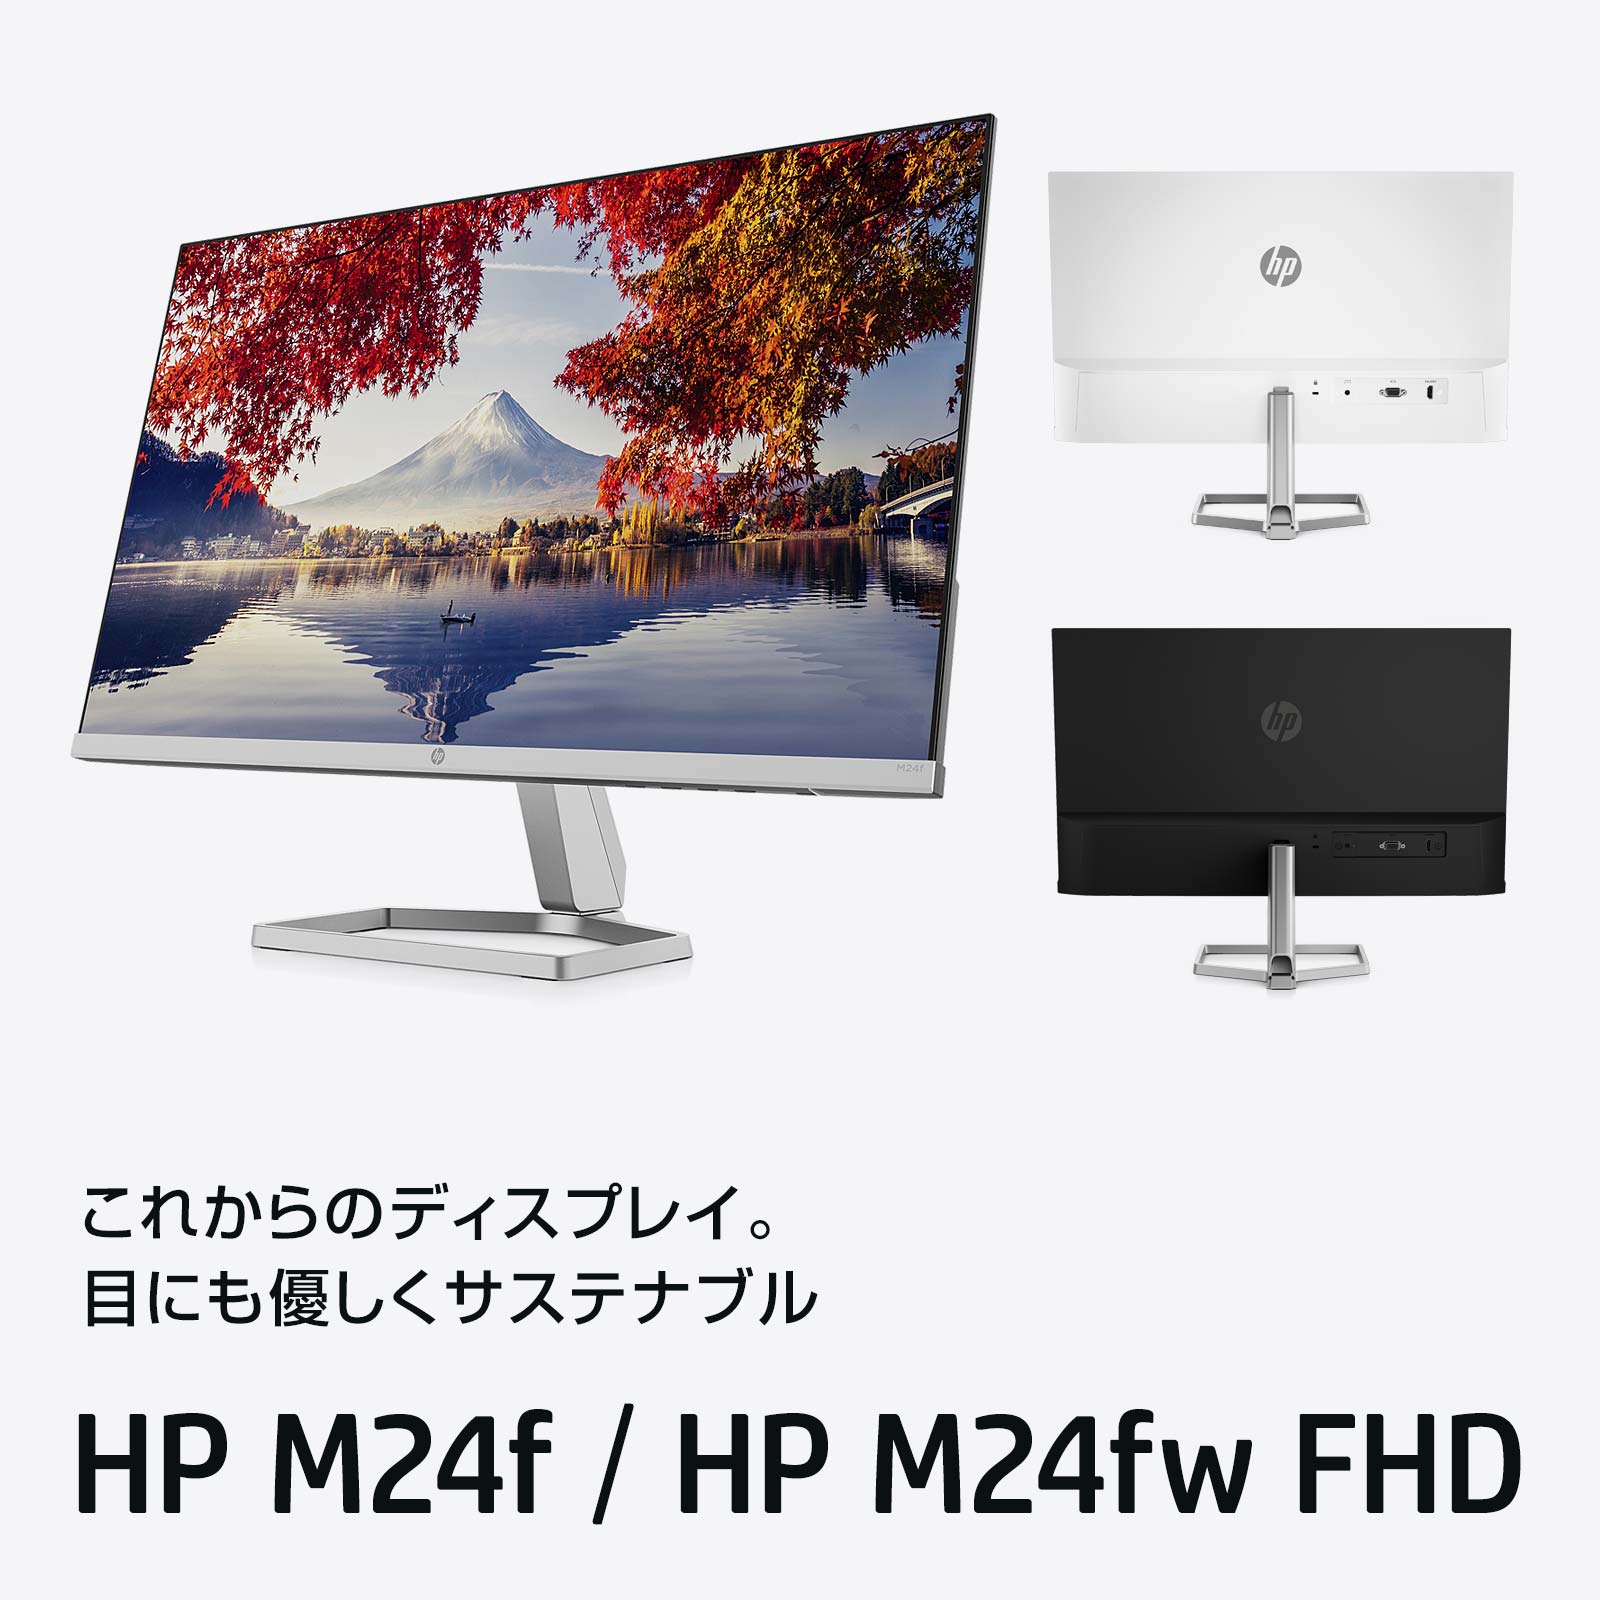 HP M24fwa